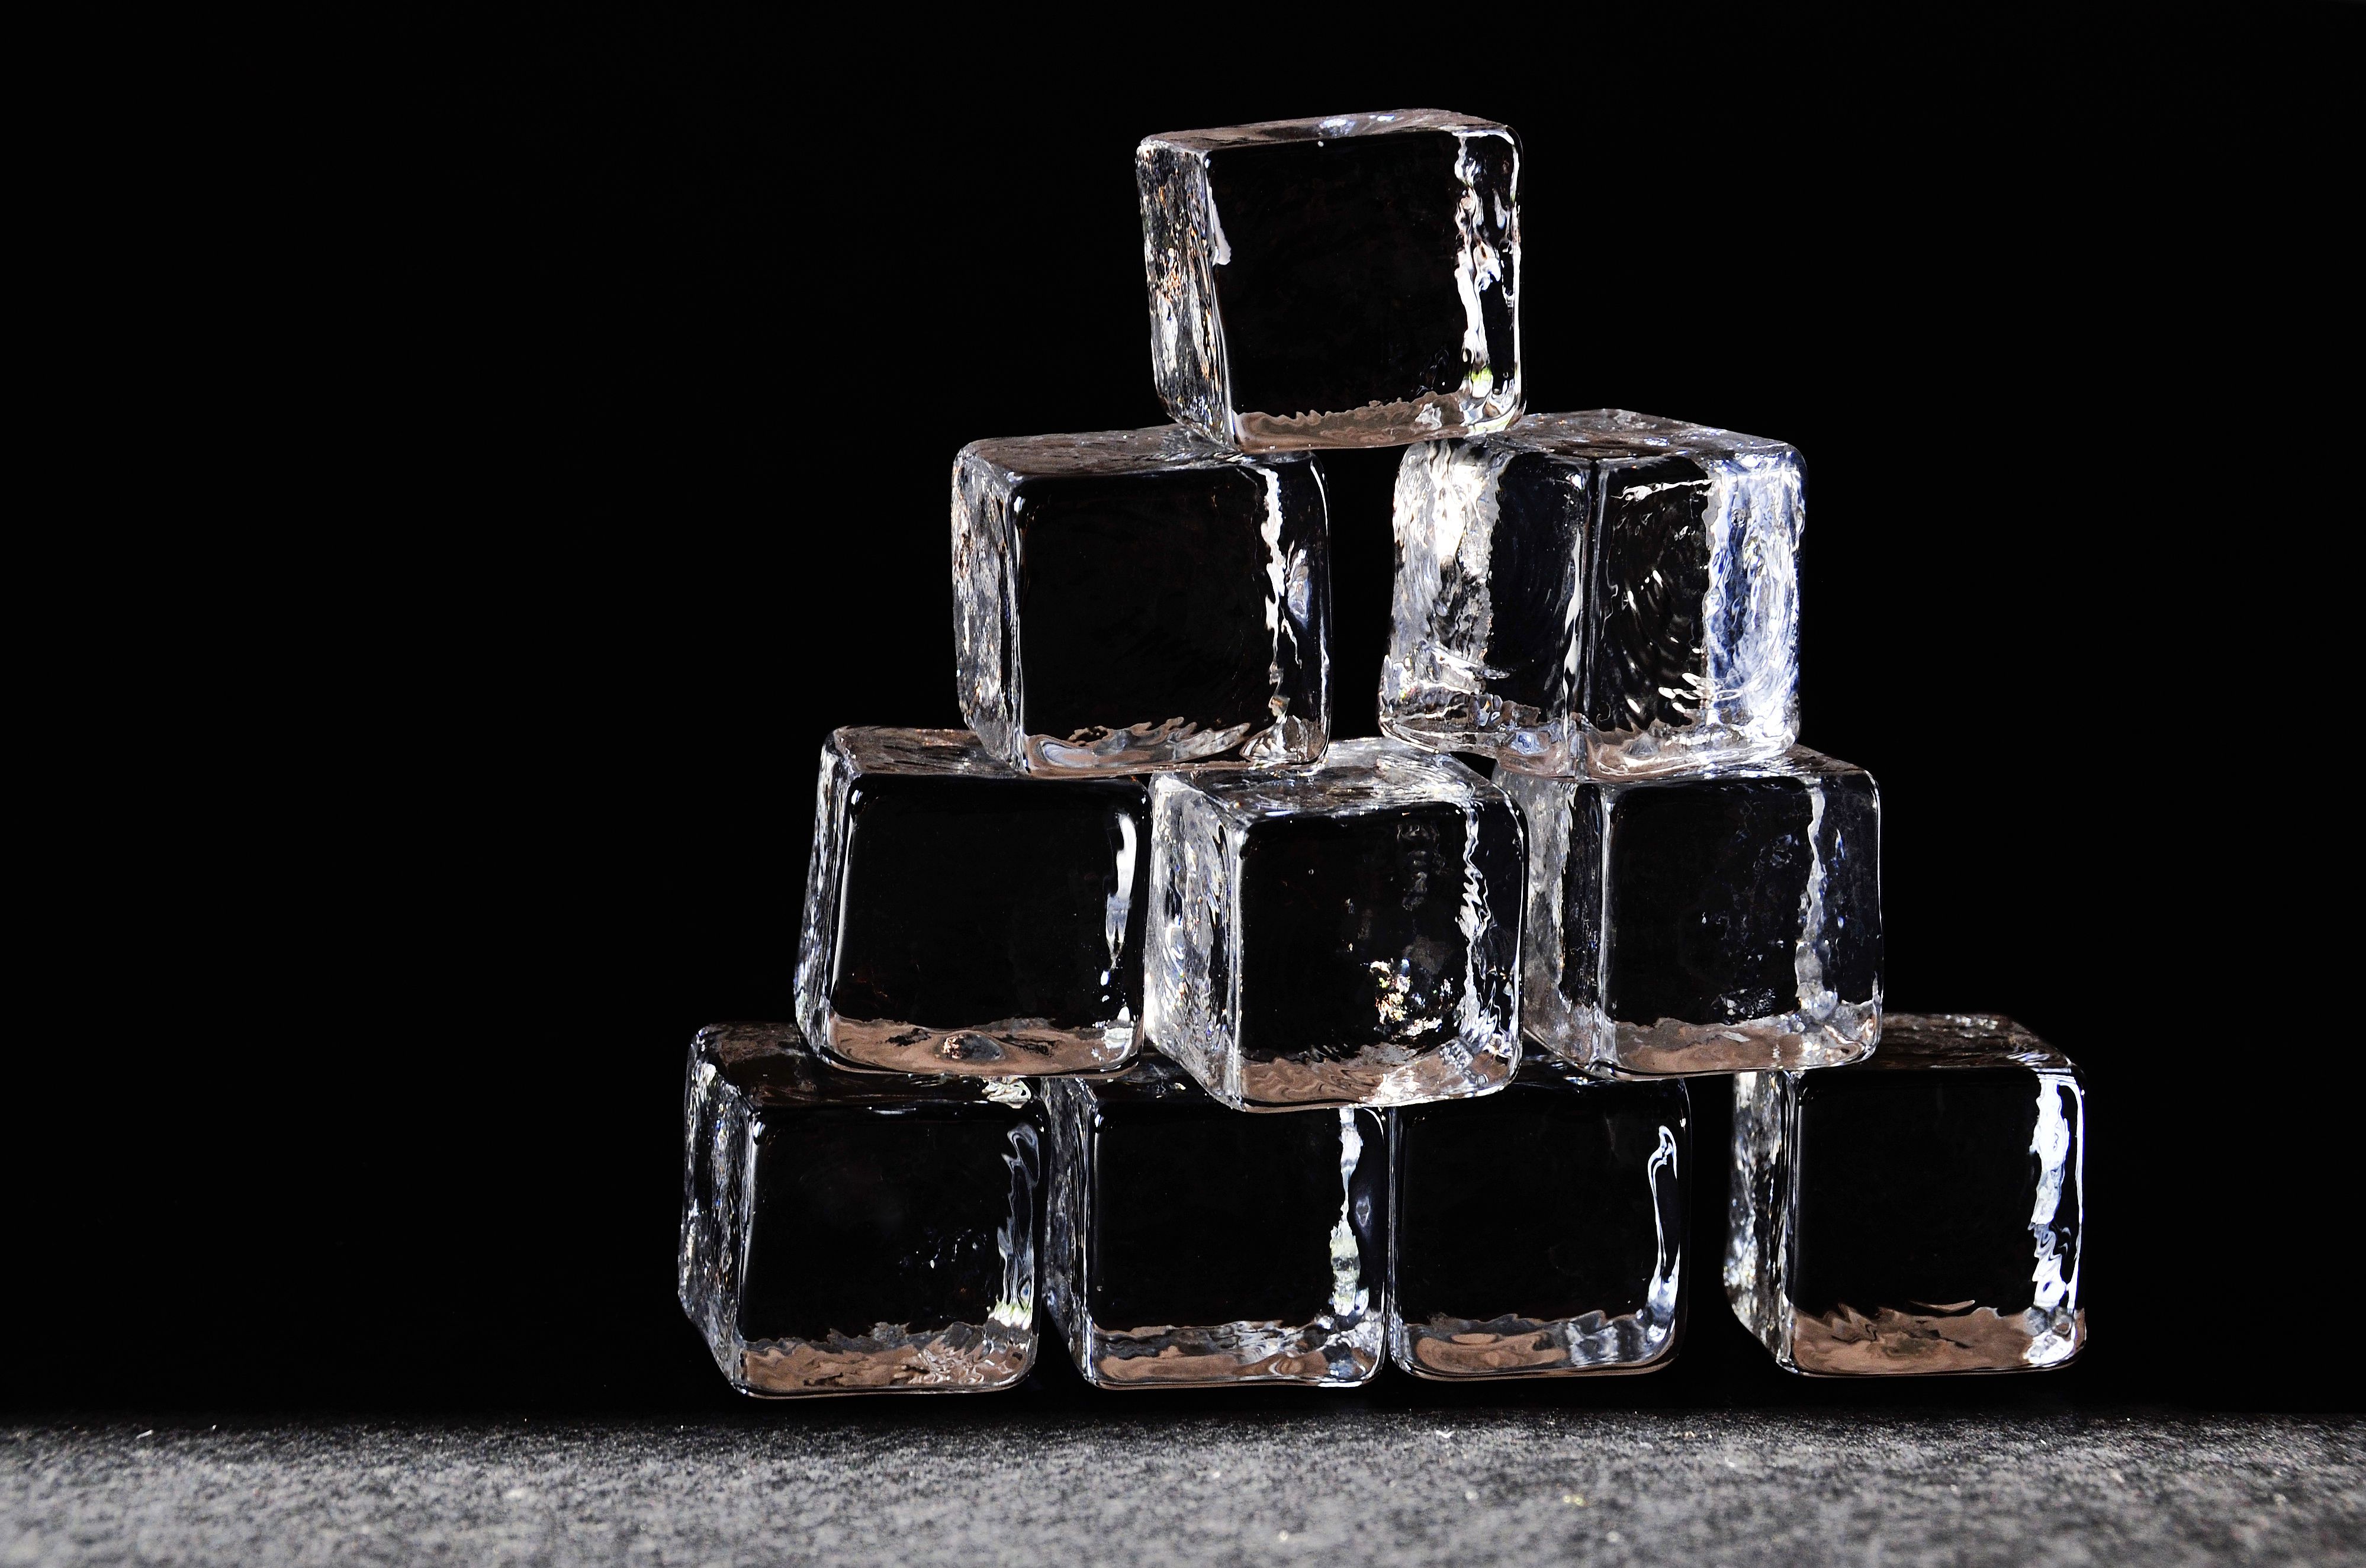 ice blocks